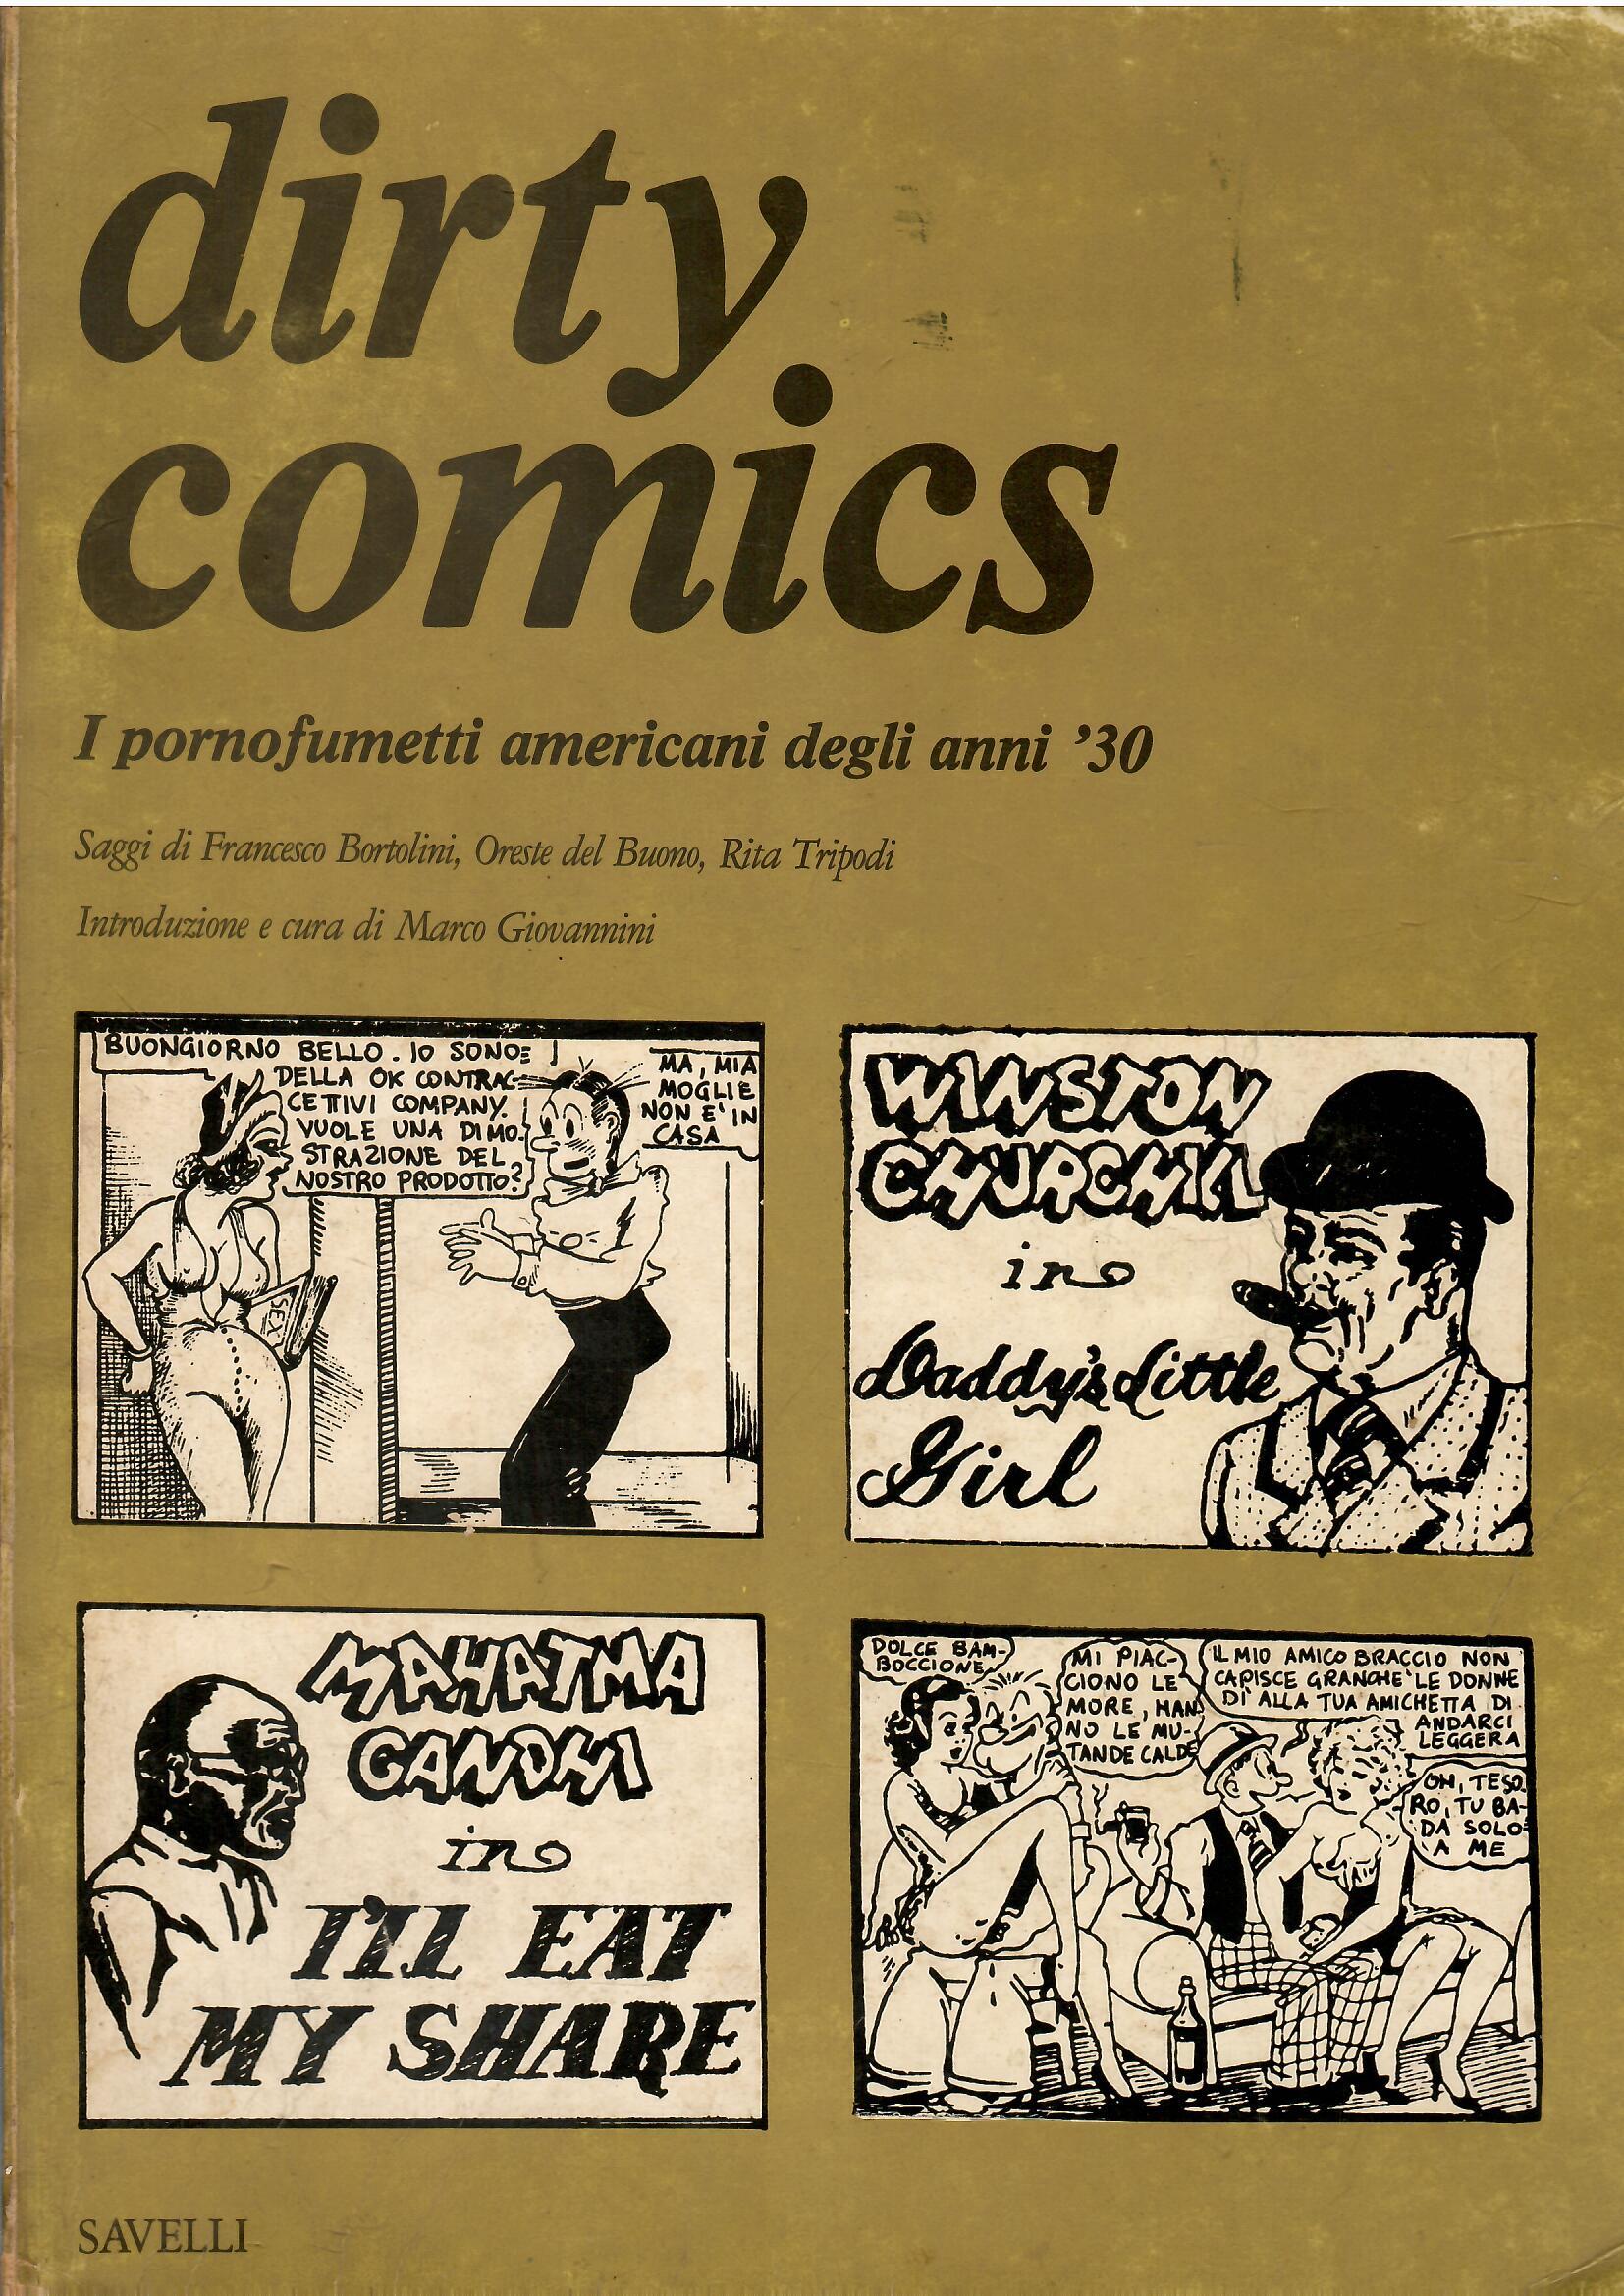 Dirty Comics, Used - AbeBooks